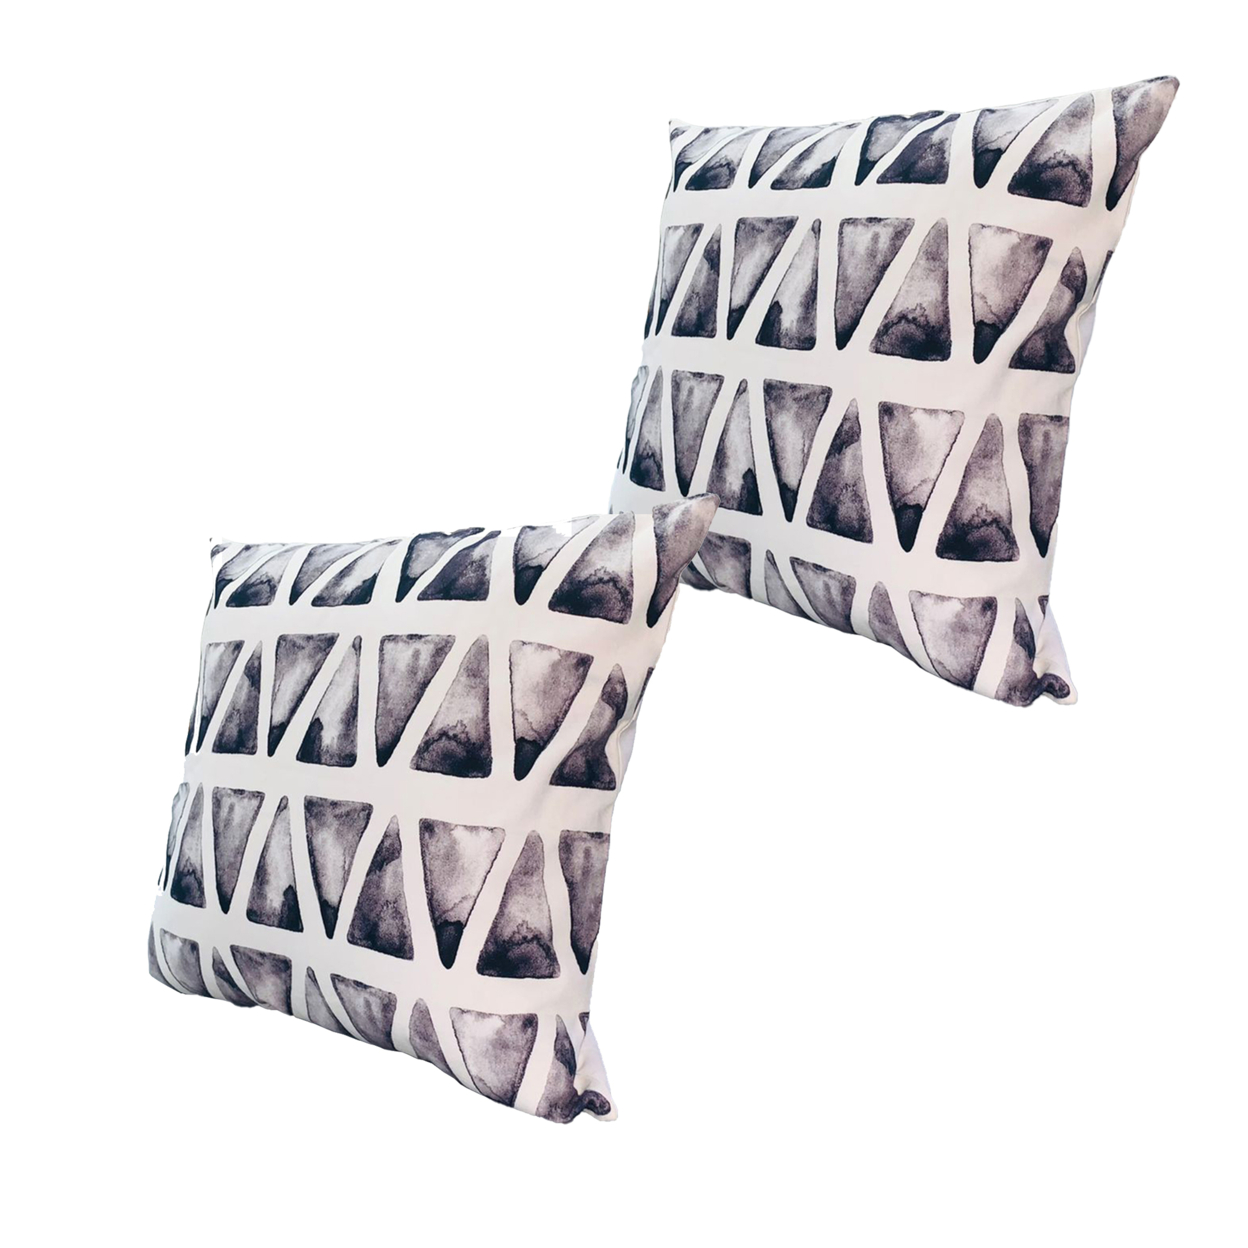 20 X 20 Square Cotton Accent Throw Pillows, Triangular Pattern, Set Of 2, Gray, White